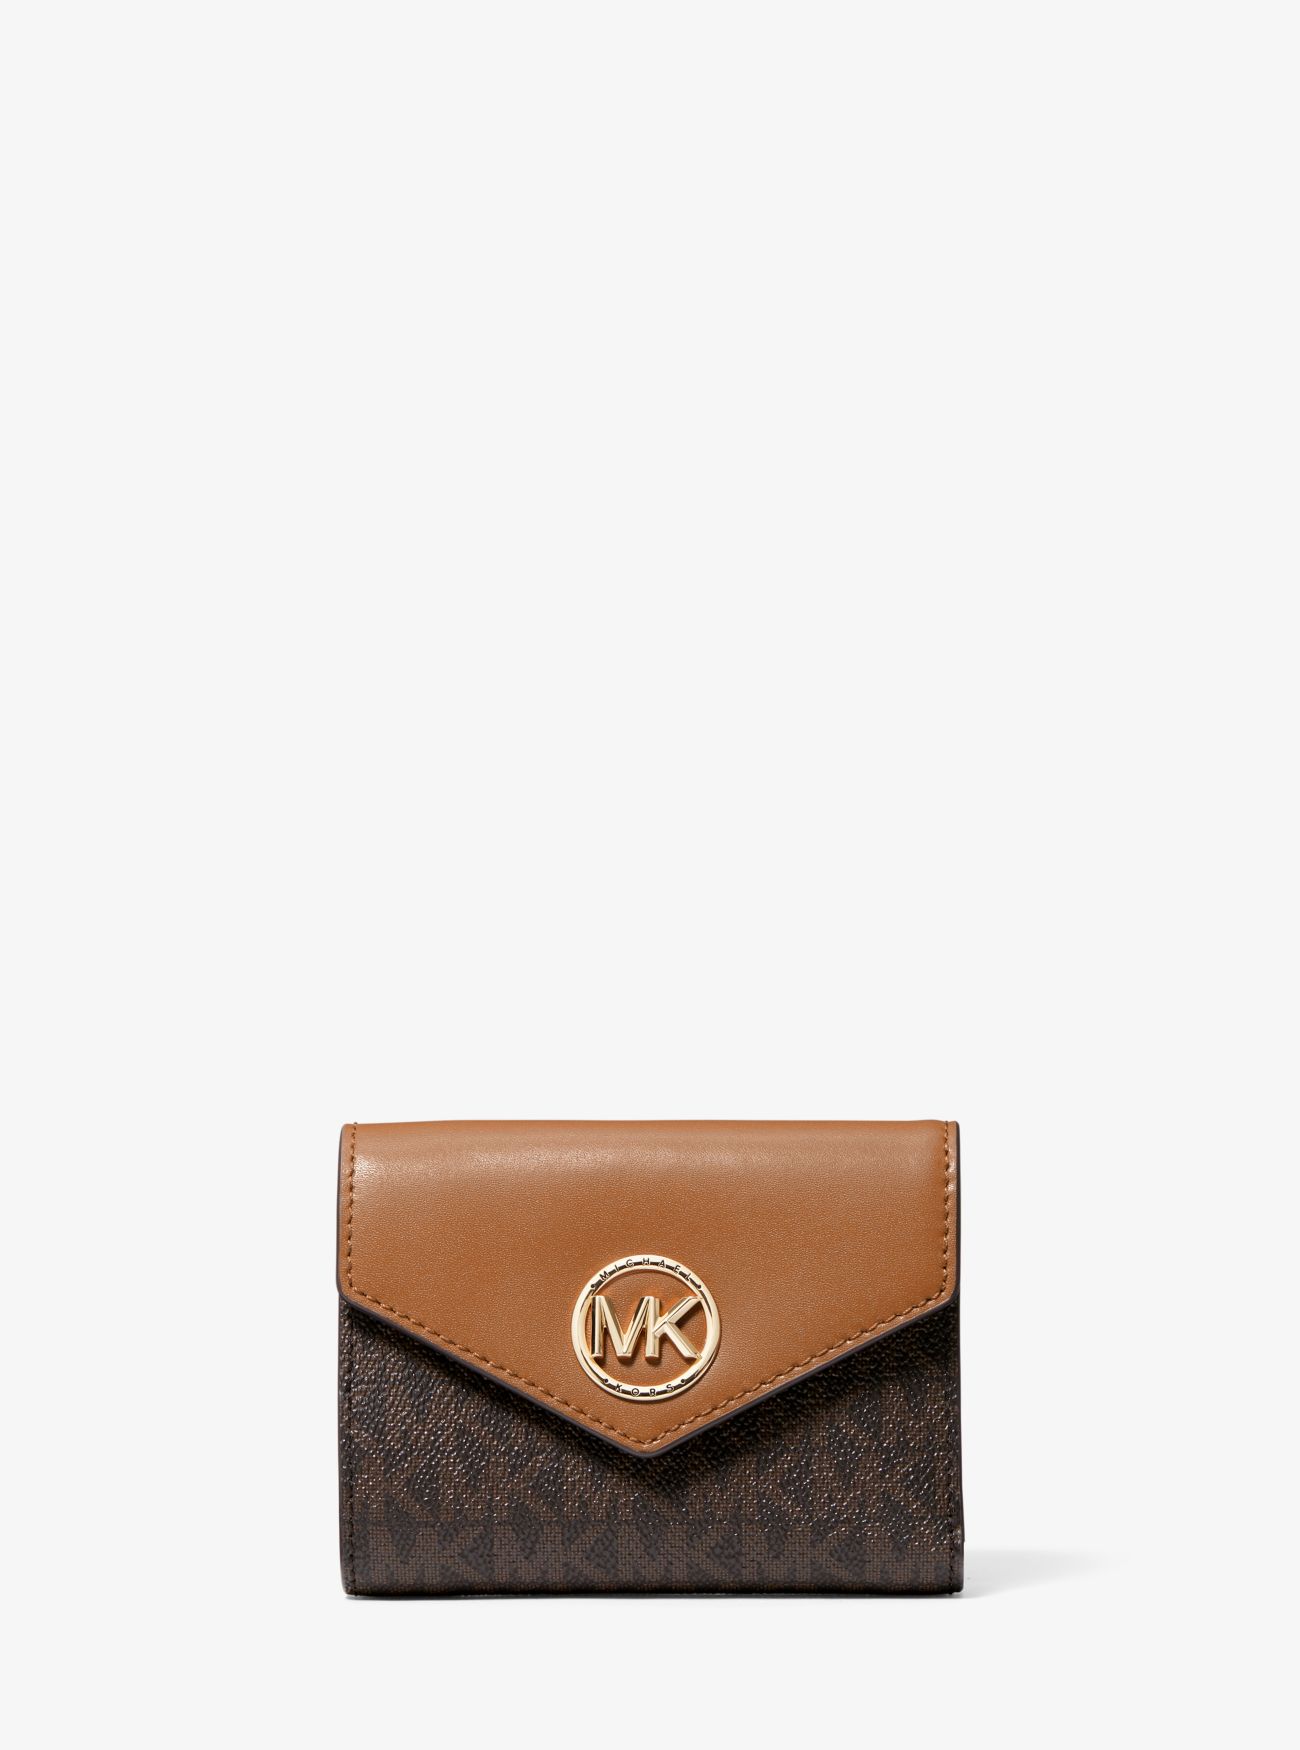 MK Greenwich Medium Signature Logo and Leather Tri-Fold Envelope Wallet - Brown - Michael Kors